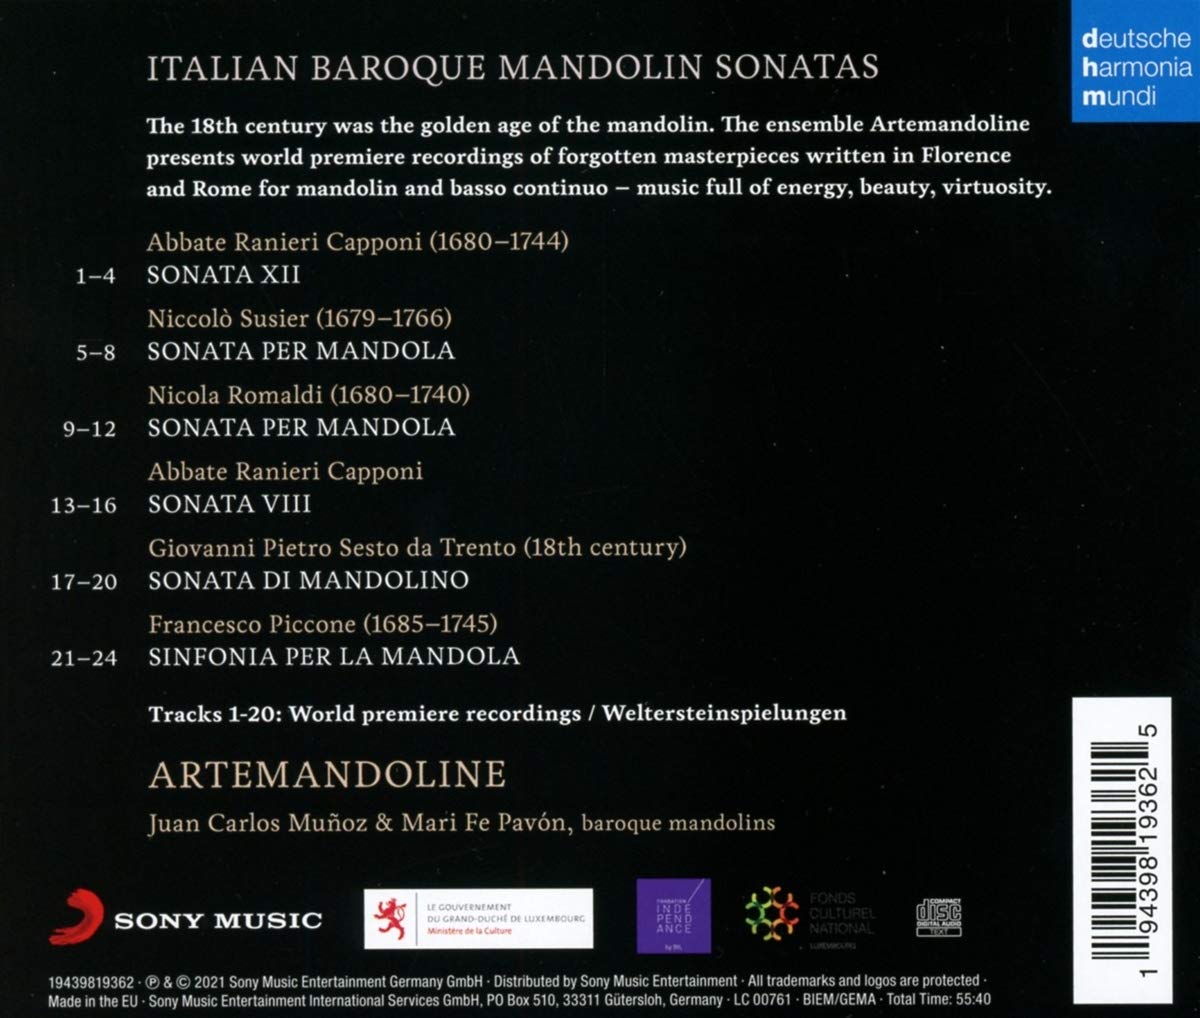 Artemandoline 이탈리아 바로크 만돌린 소나타집 (Italian Baroque Mandolin Sonatas) 